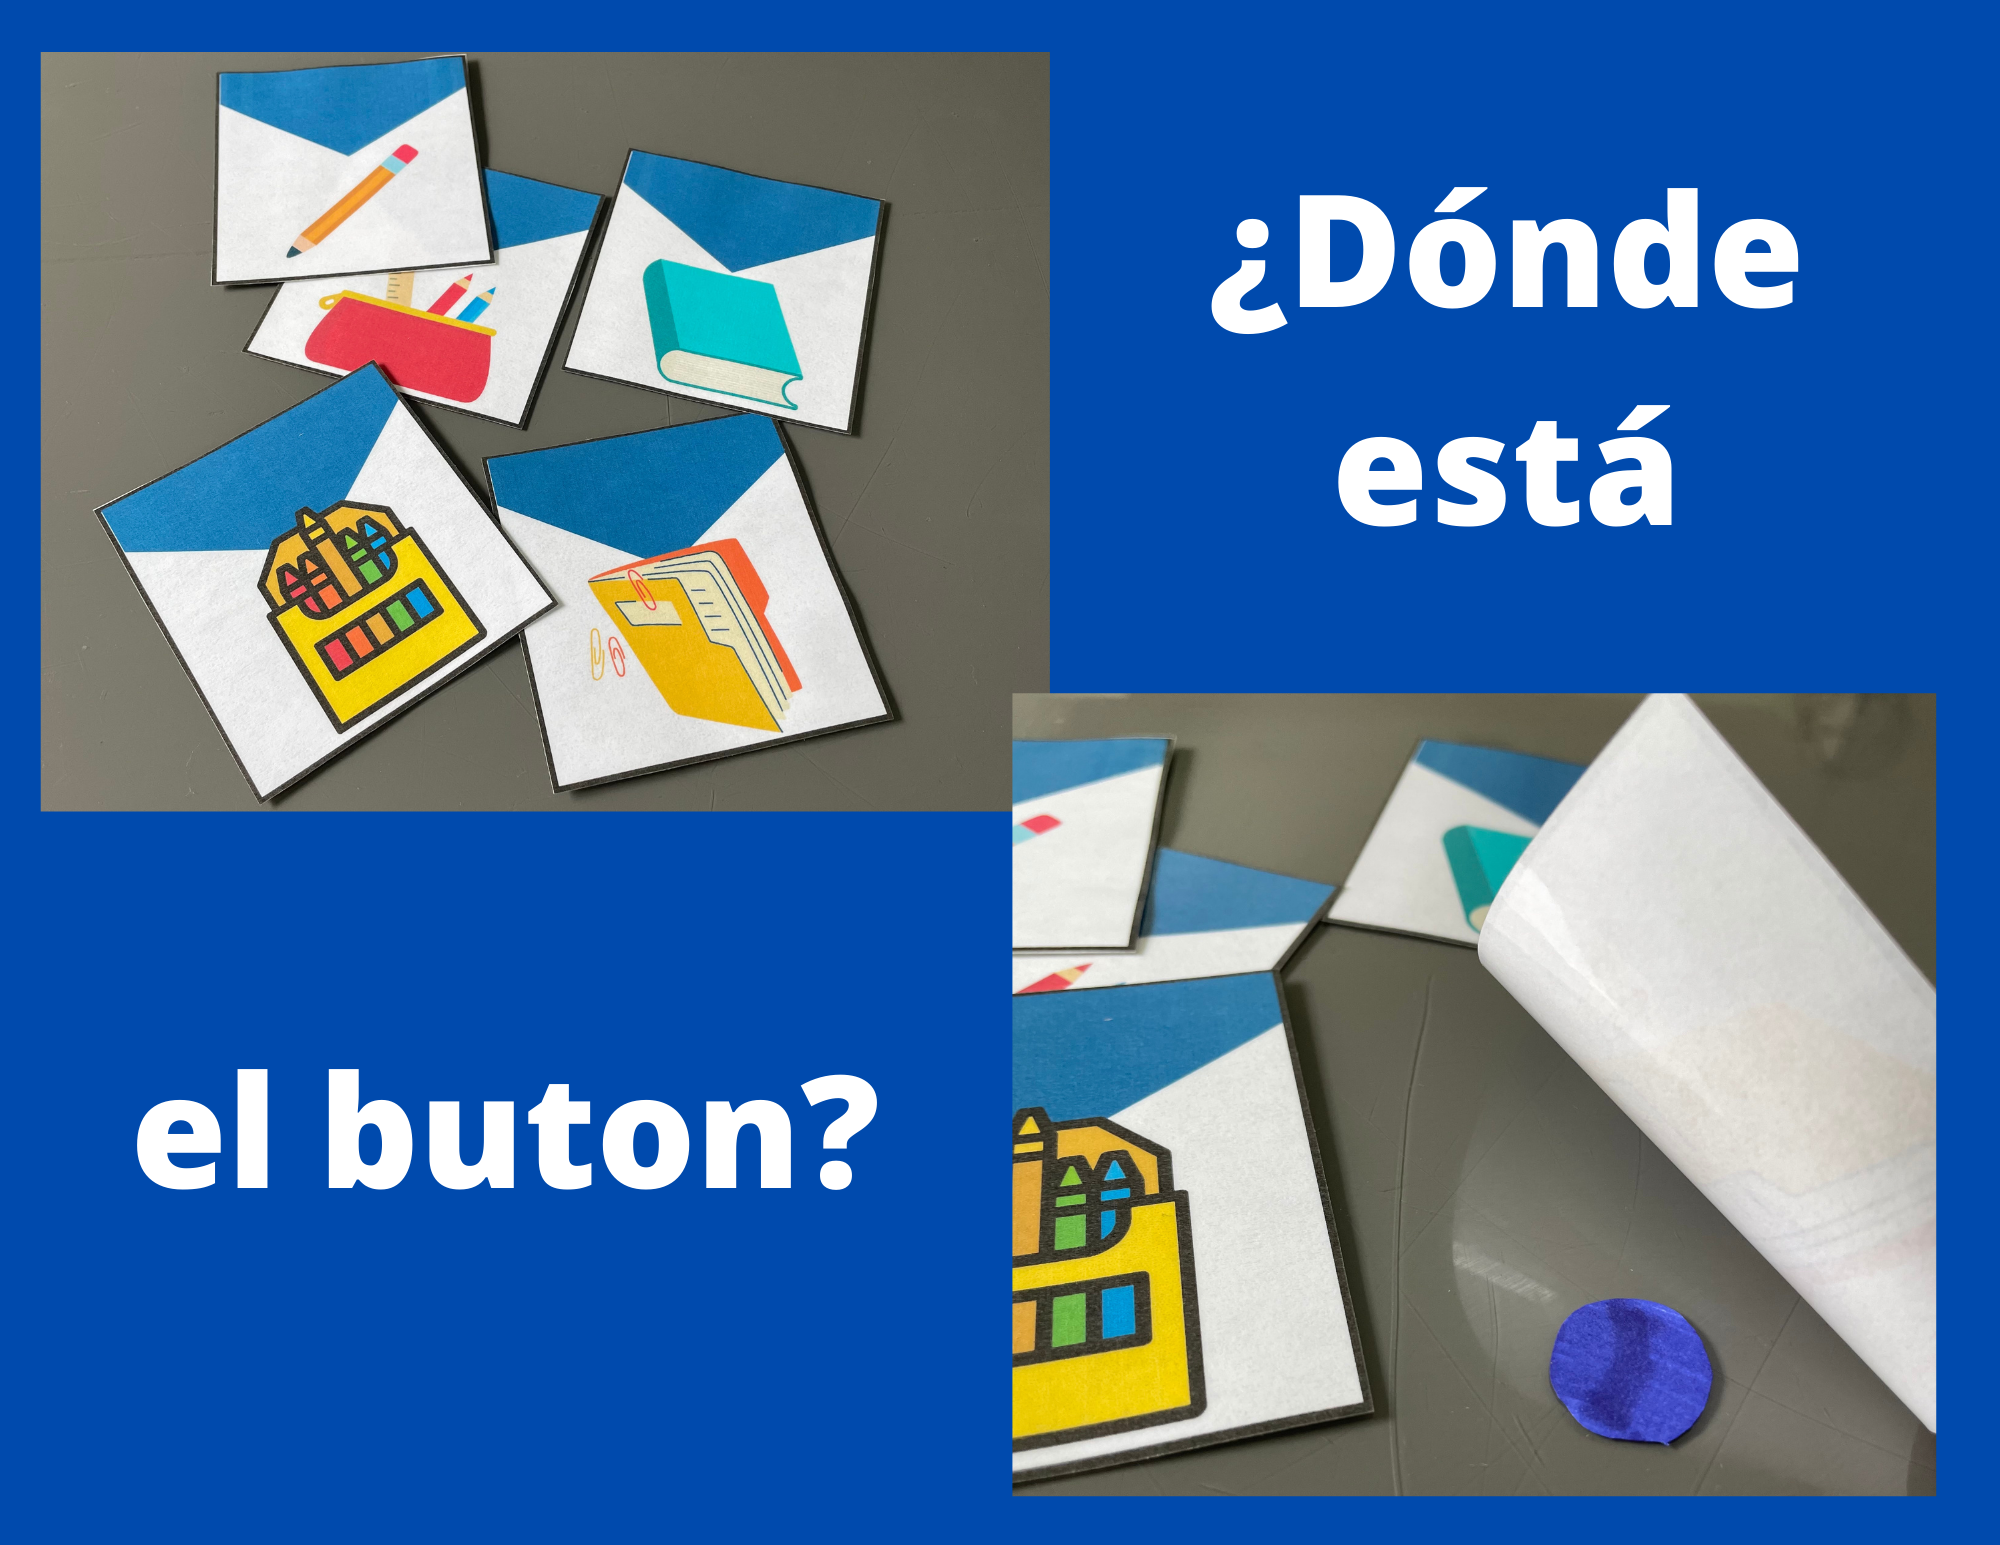 A picture of a game called, "¿Dónde está el buton?" or "Where's the button?"